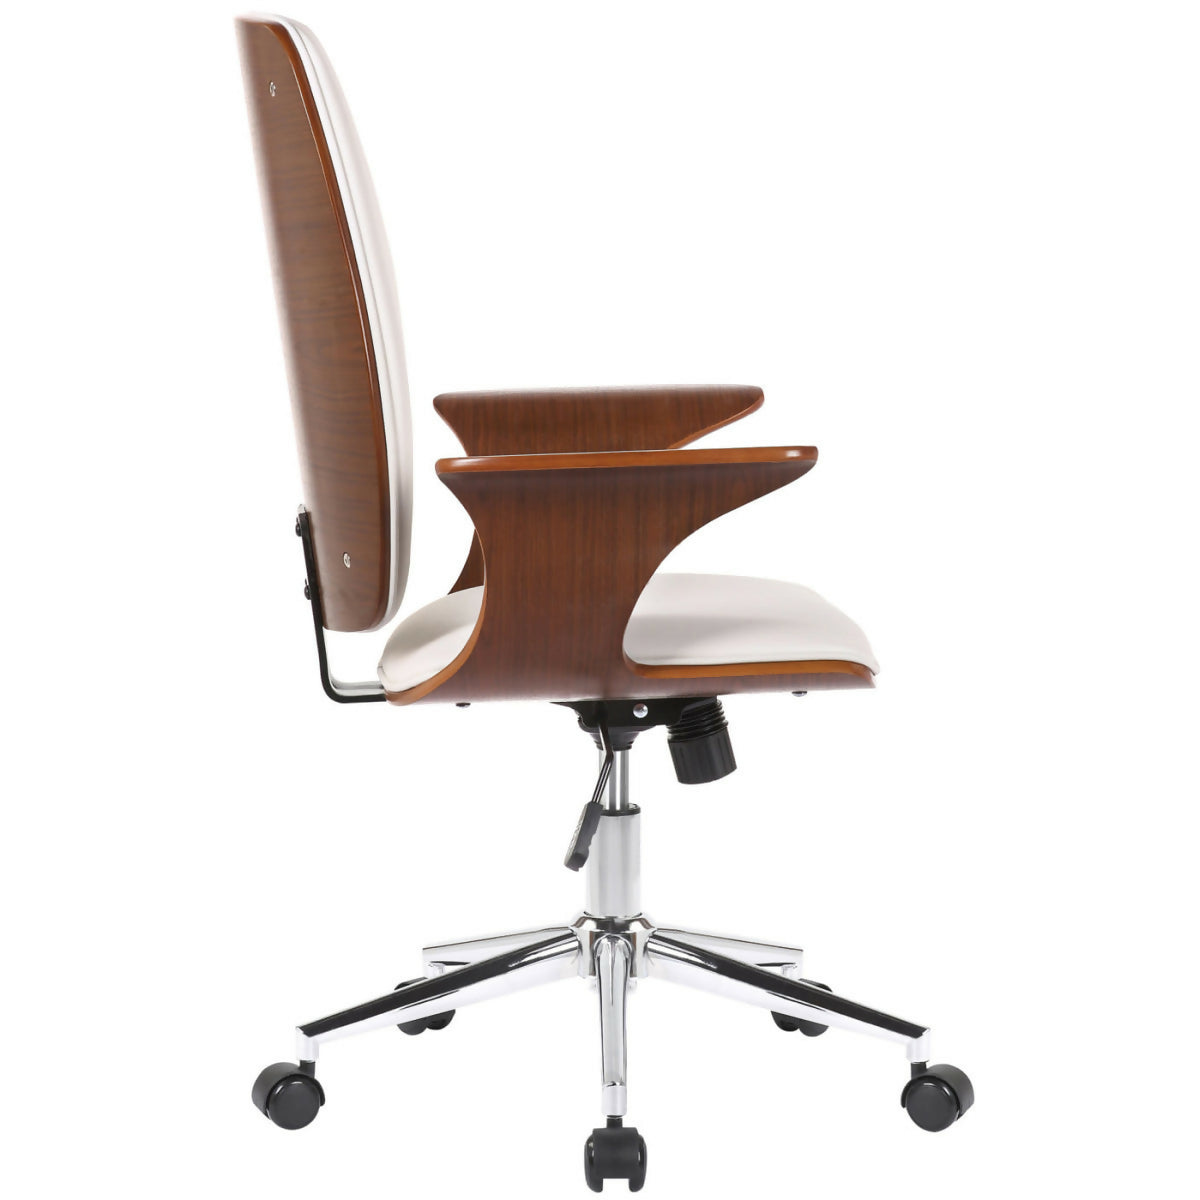 Burbank office chair - Walnut - White